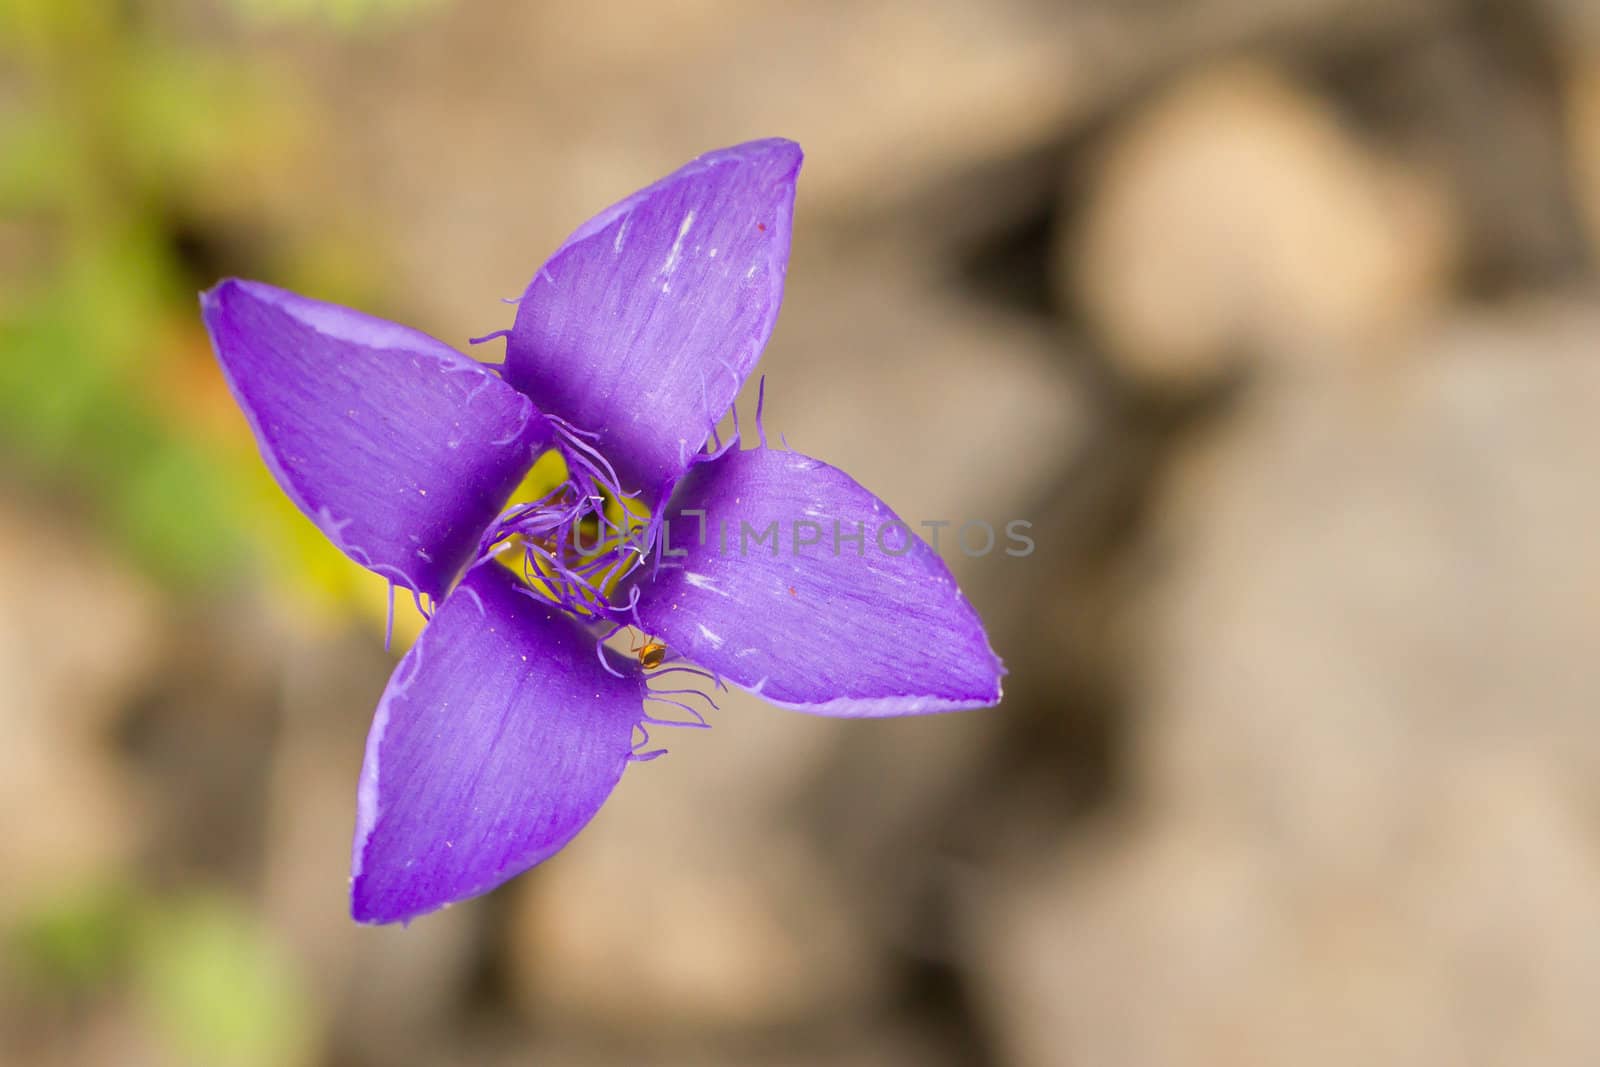 A blooming purple flower